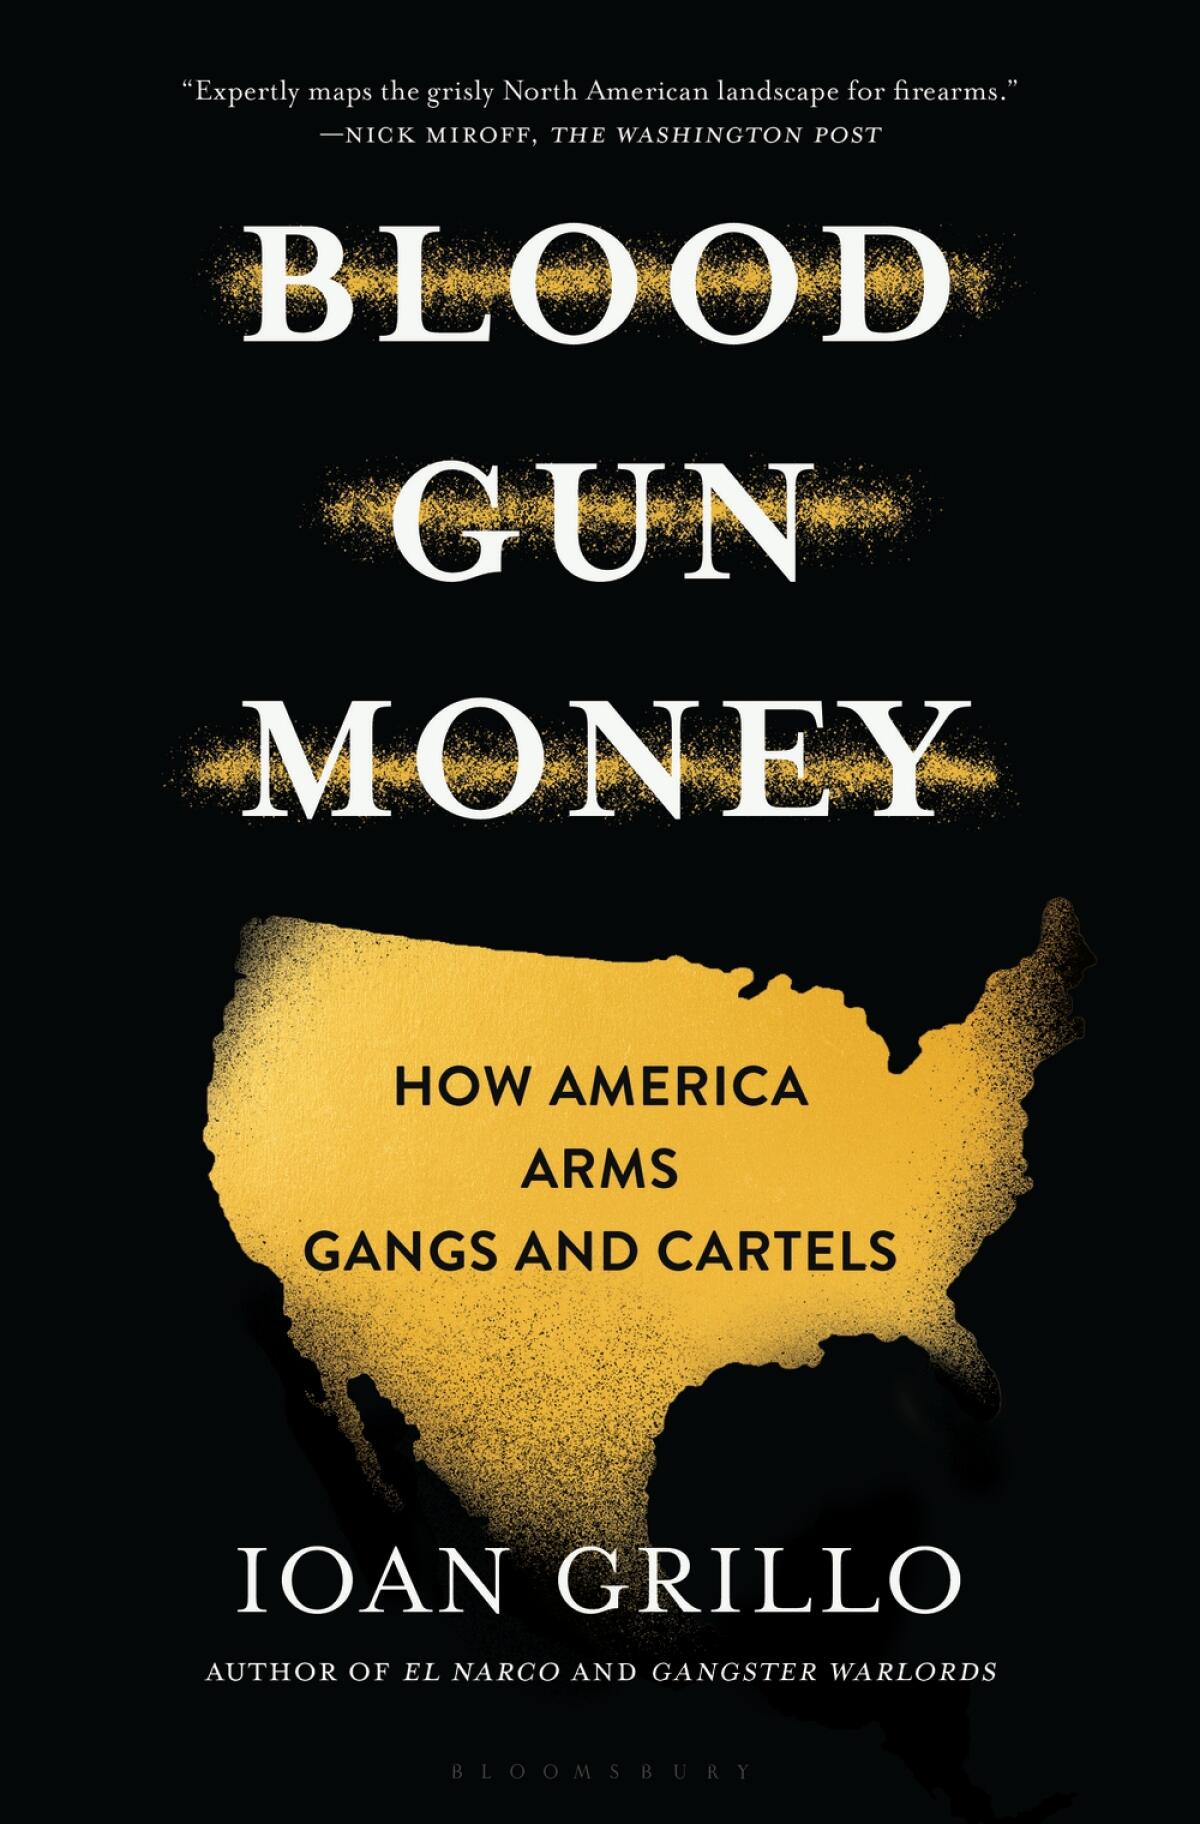 "Blood Gun Money," by Ioan Grillo